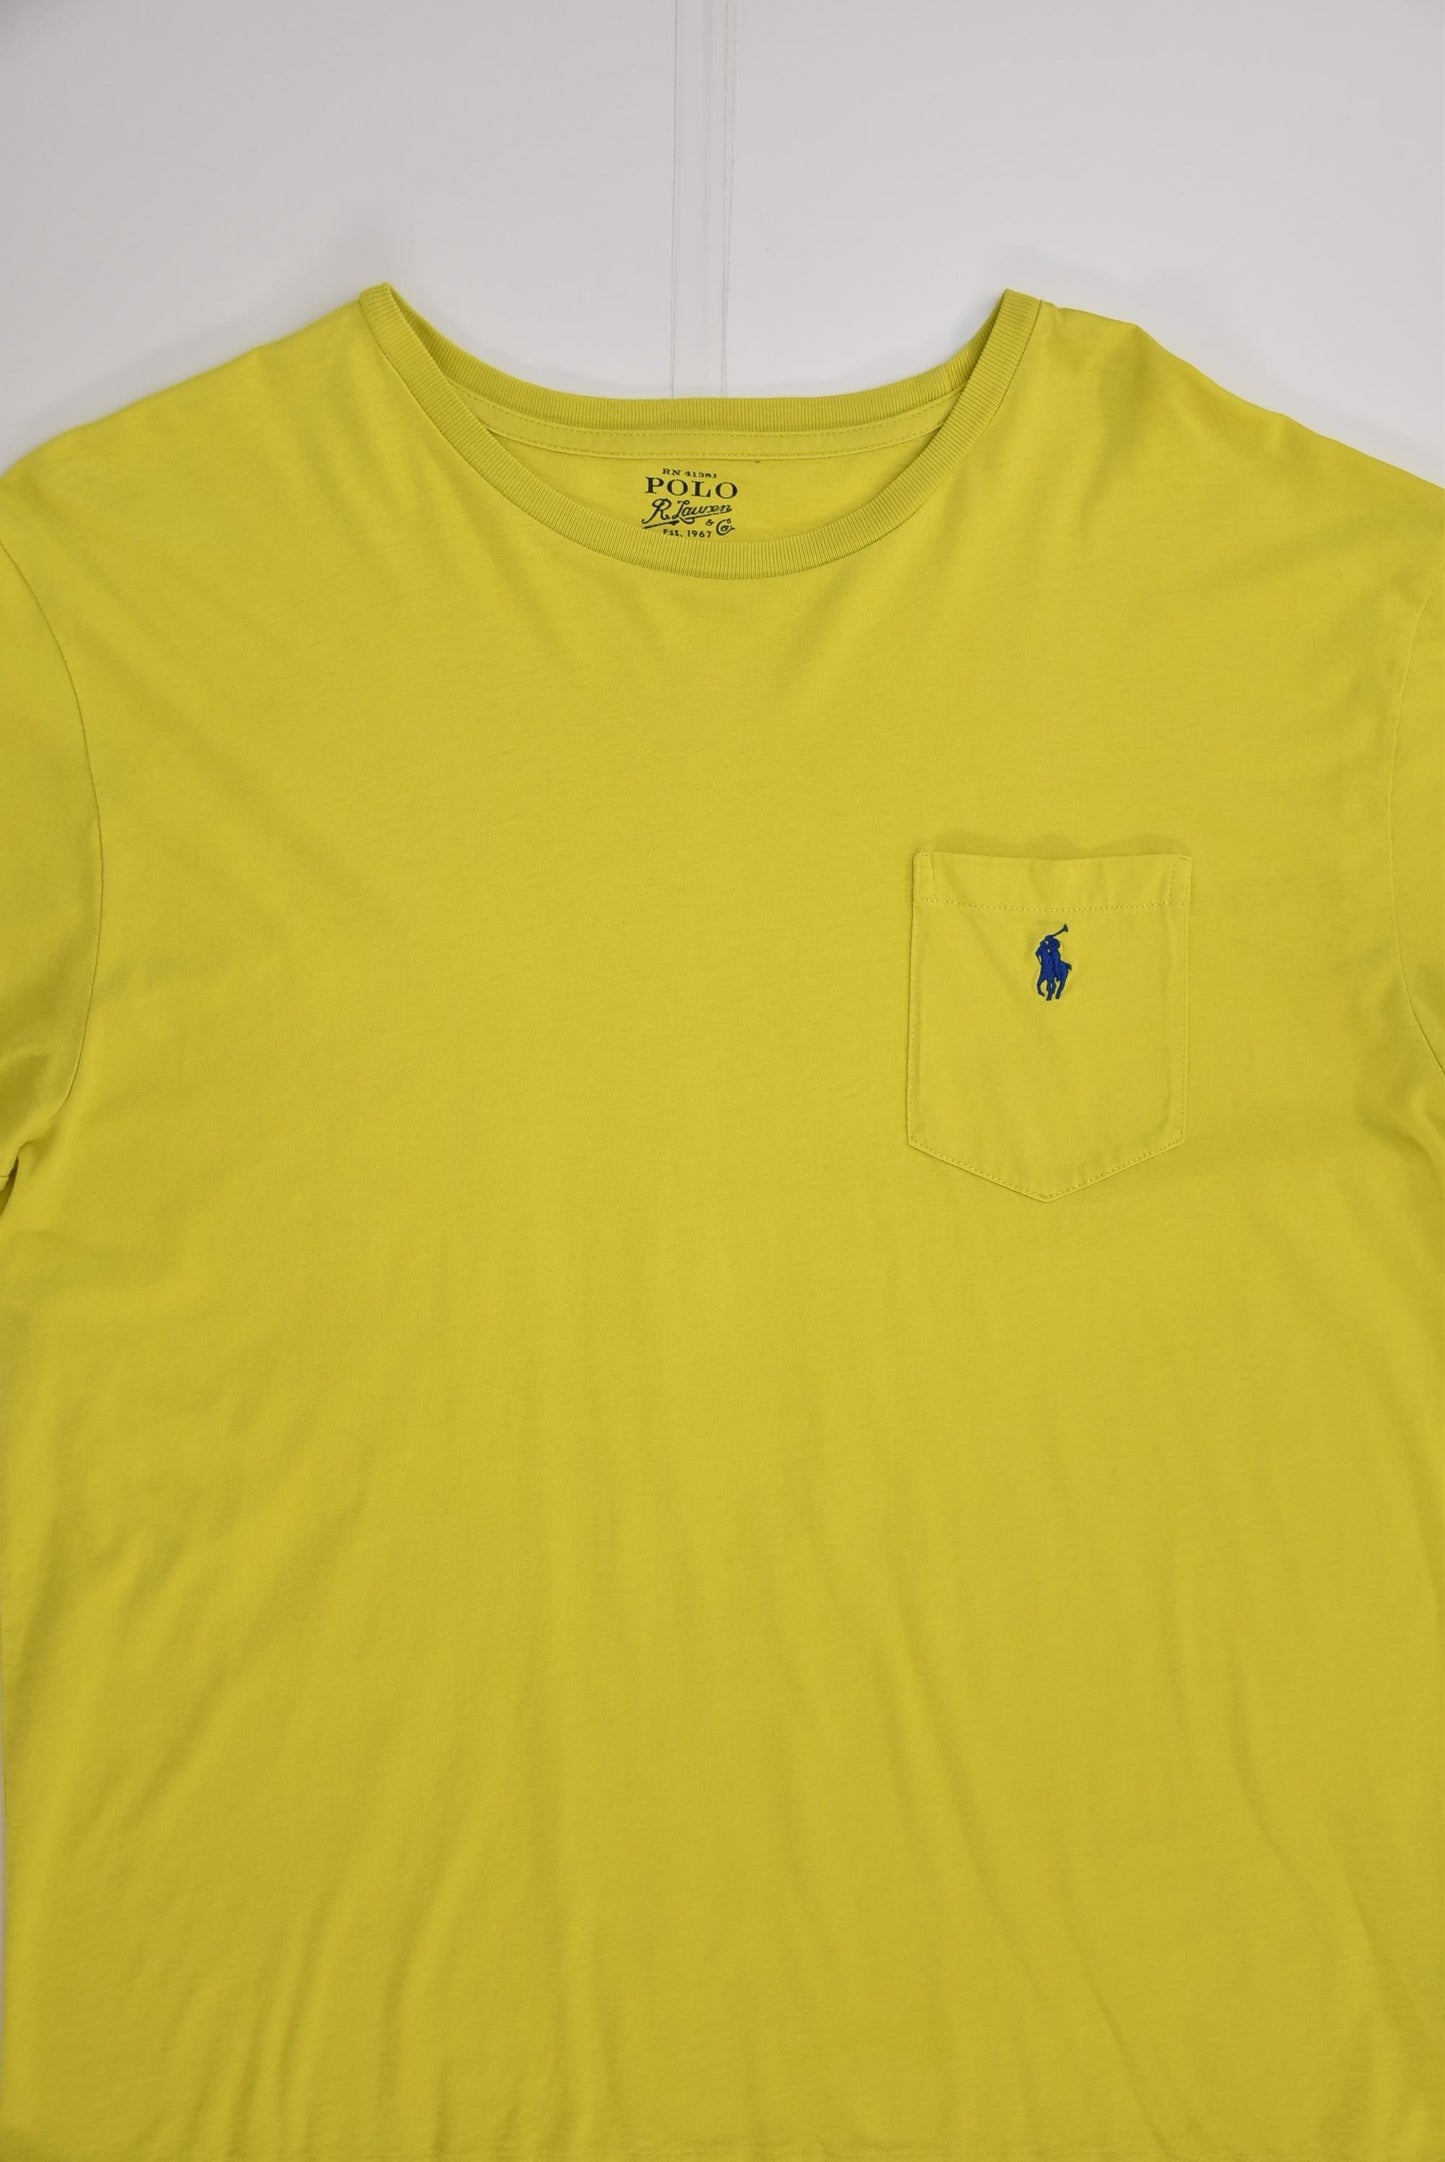 Polo Ralph Lauren T-shirt (L) - Slayyy Vintage